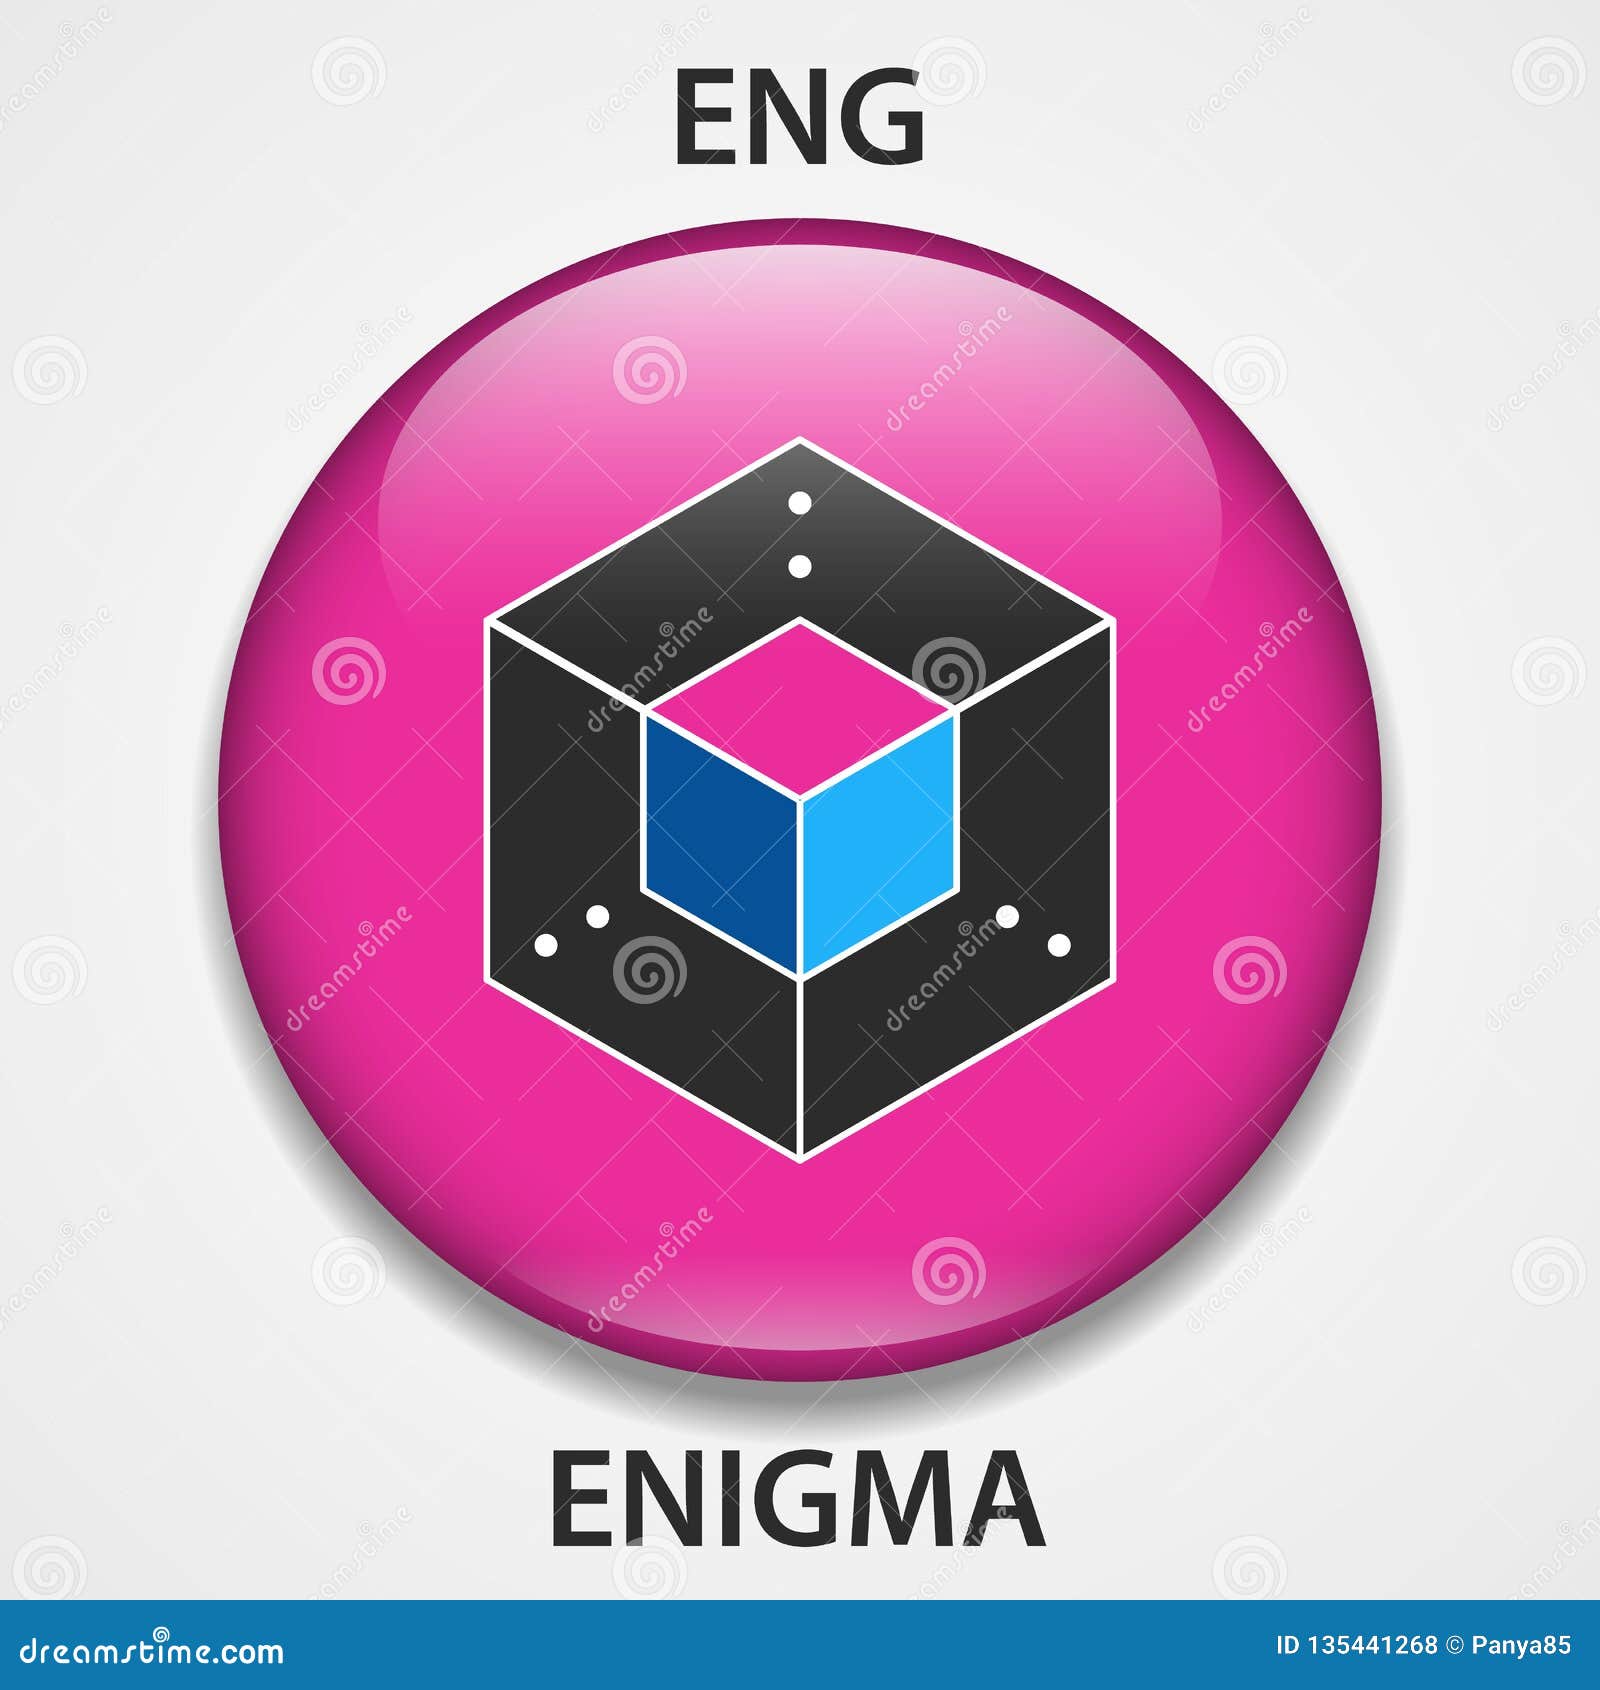 enigma coin cryptocurrency blockchain icon. virtual electronic, internet money or cryptocoin , logo